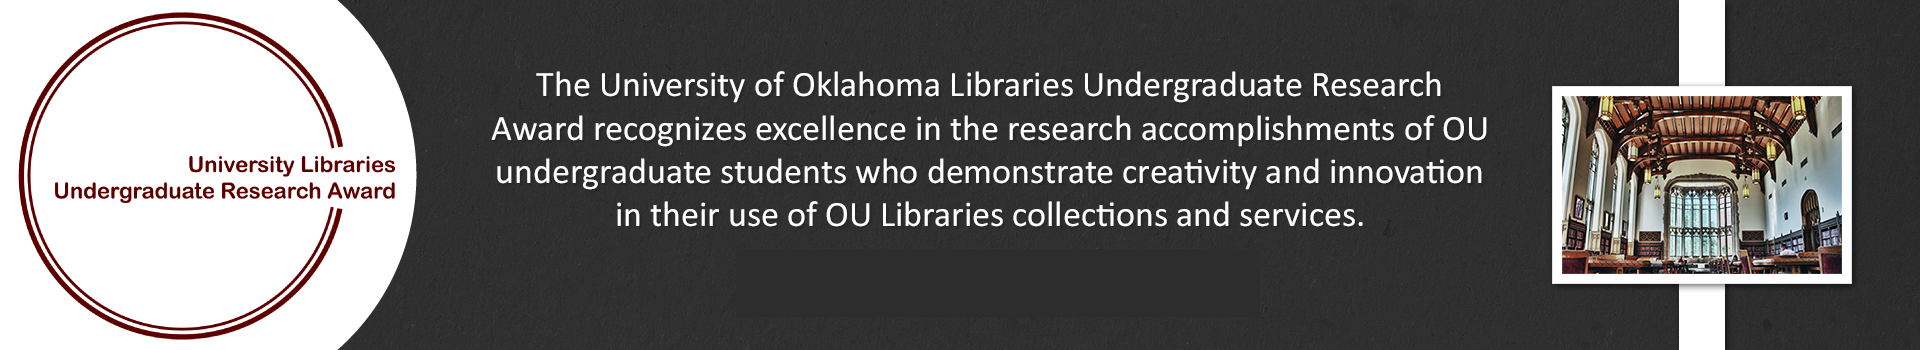 Undergraduate Research Award Banner